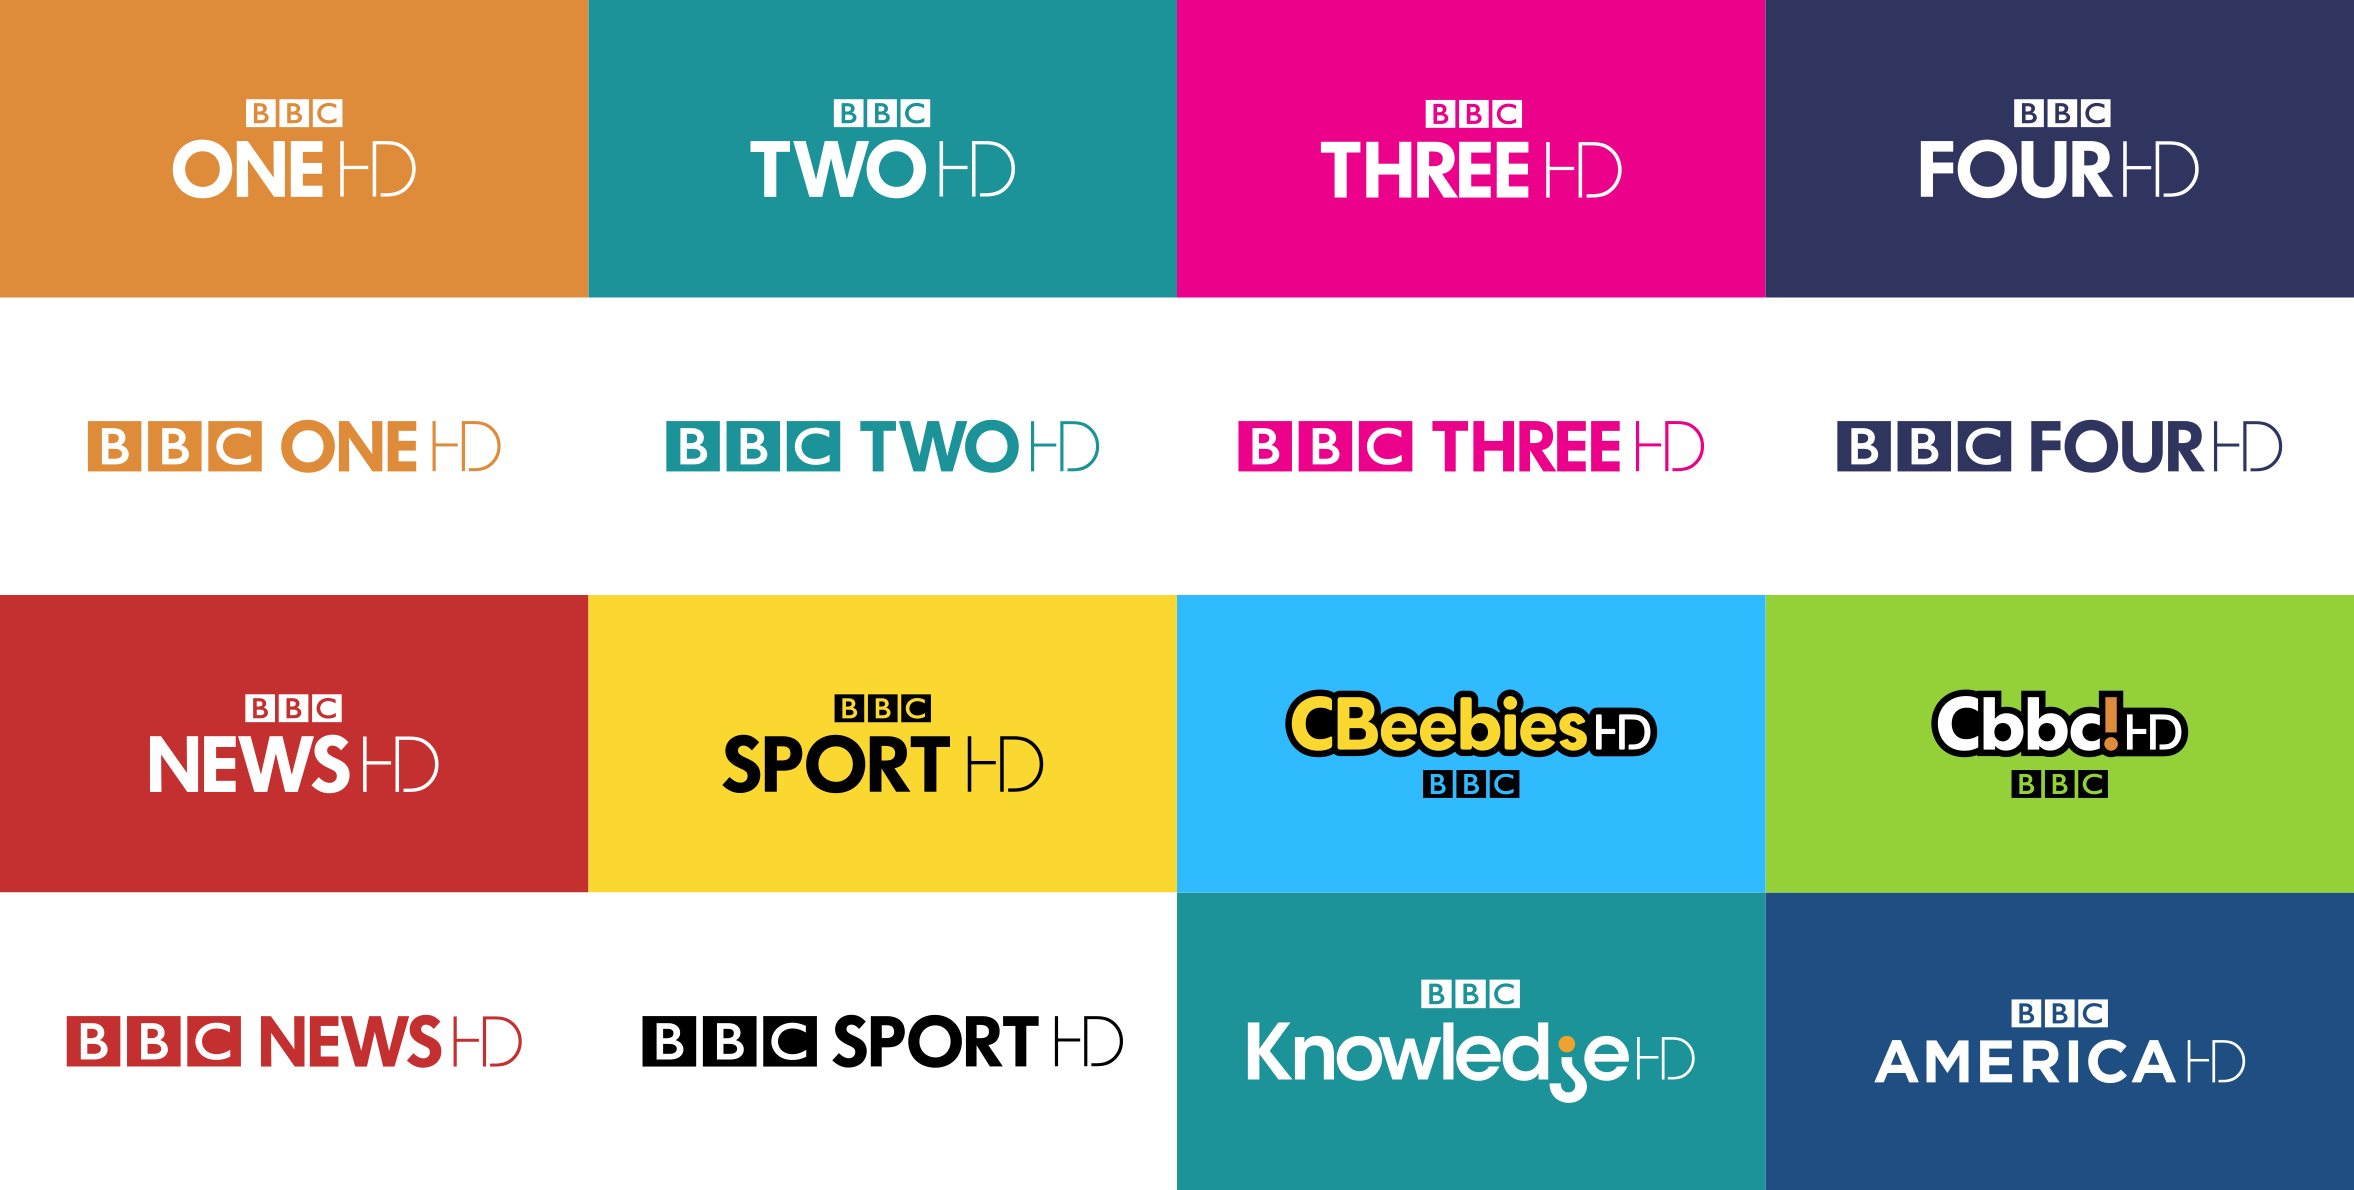 BBC Three | HD TV Channel